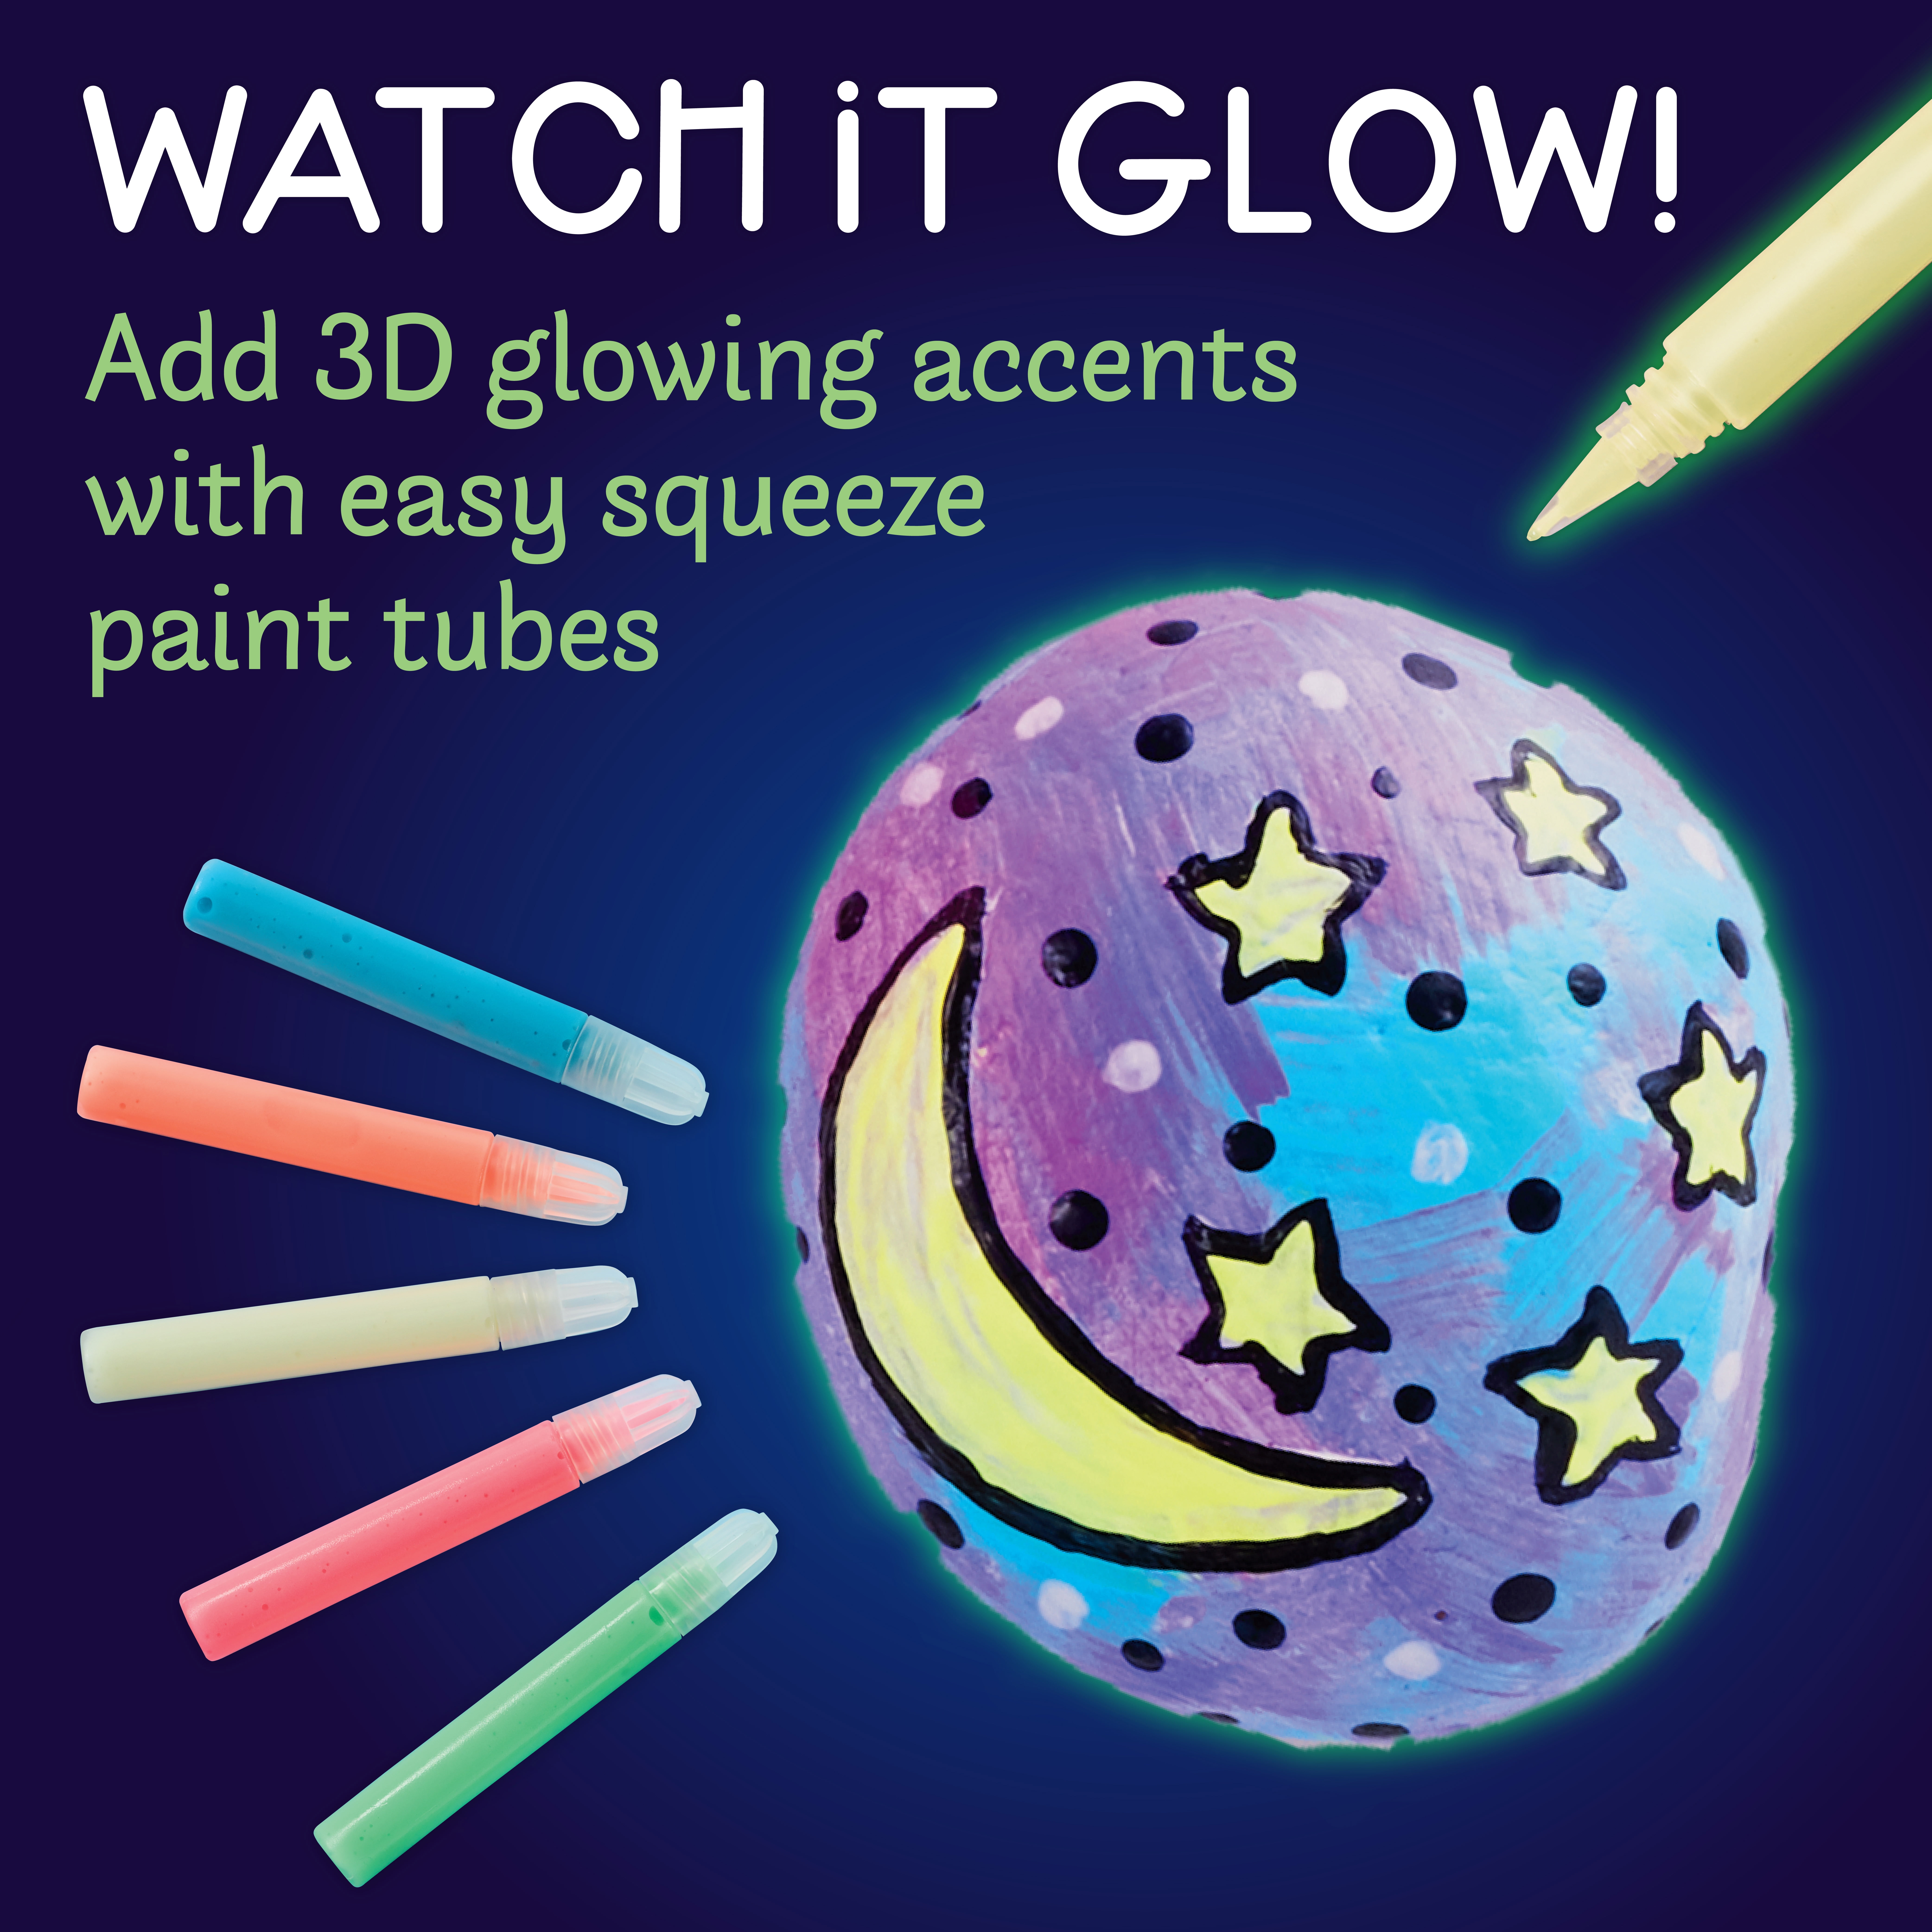 Glow in the Dark Rock Painting — Piccolo Mondo Toys